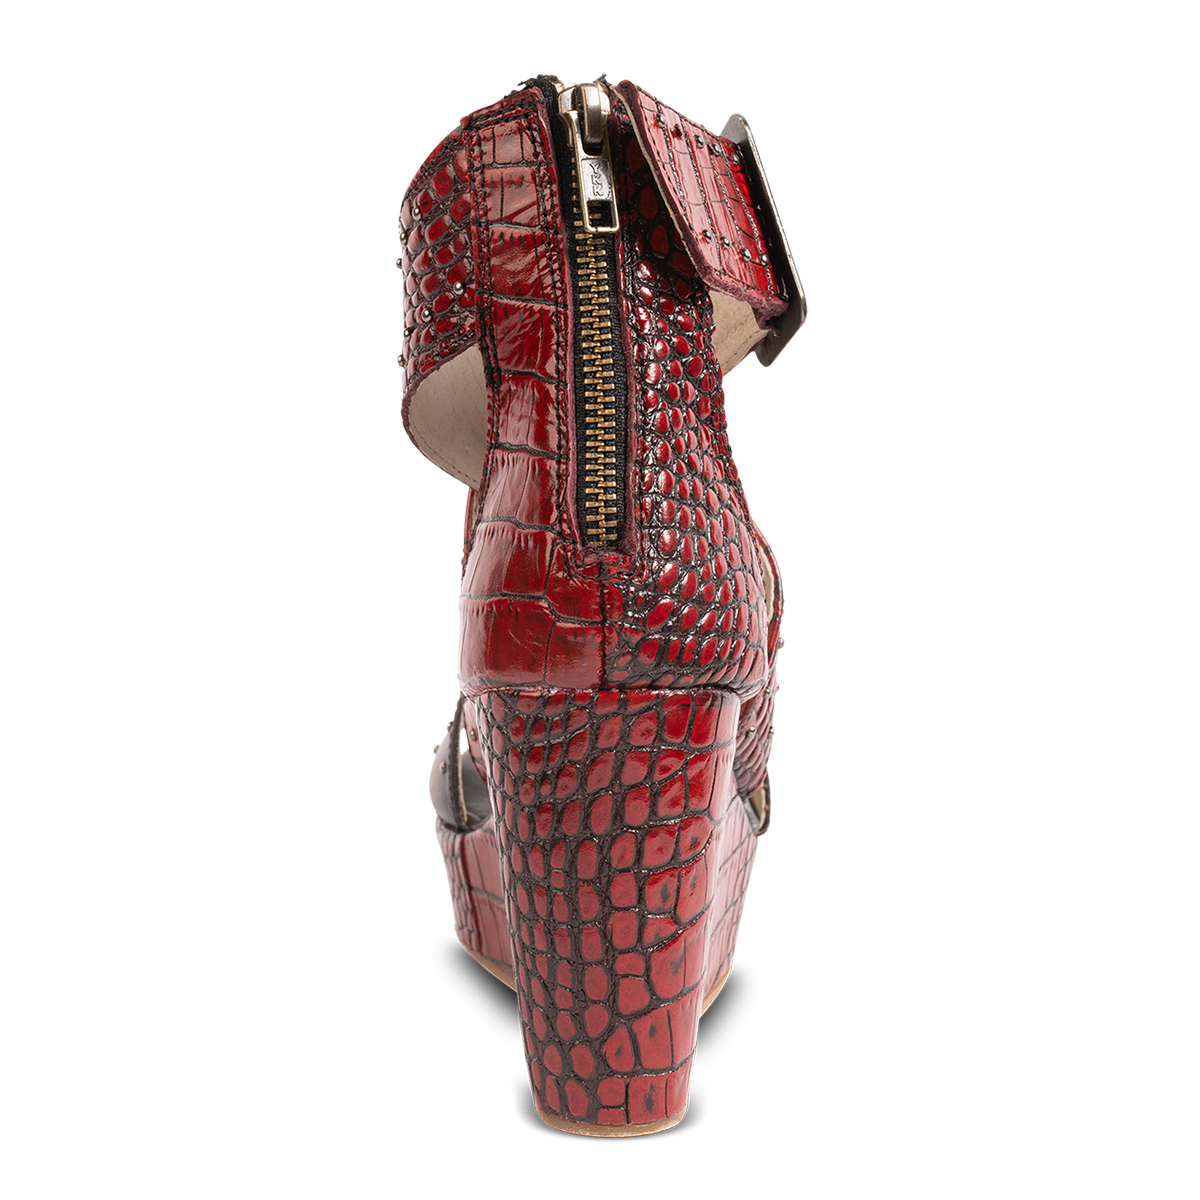 Back view showing wedge heel and zipper closure on FREEBIRD women's Terra red croco multi platform sandal with stud detailing